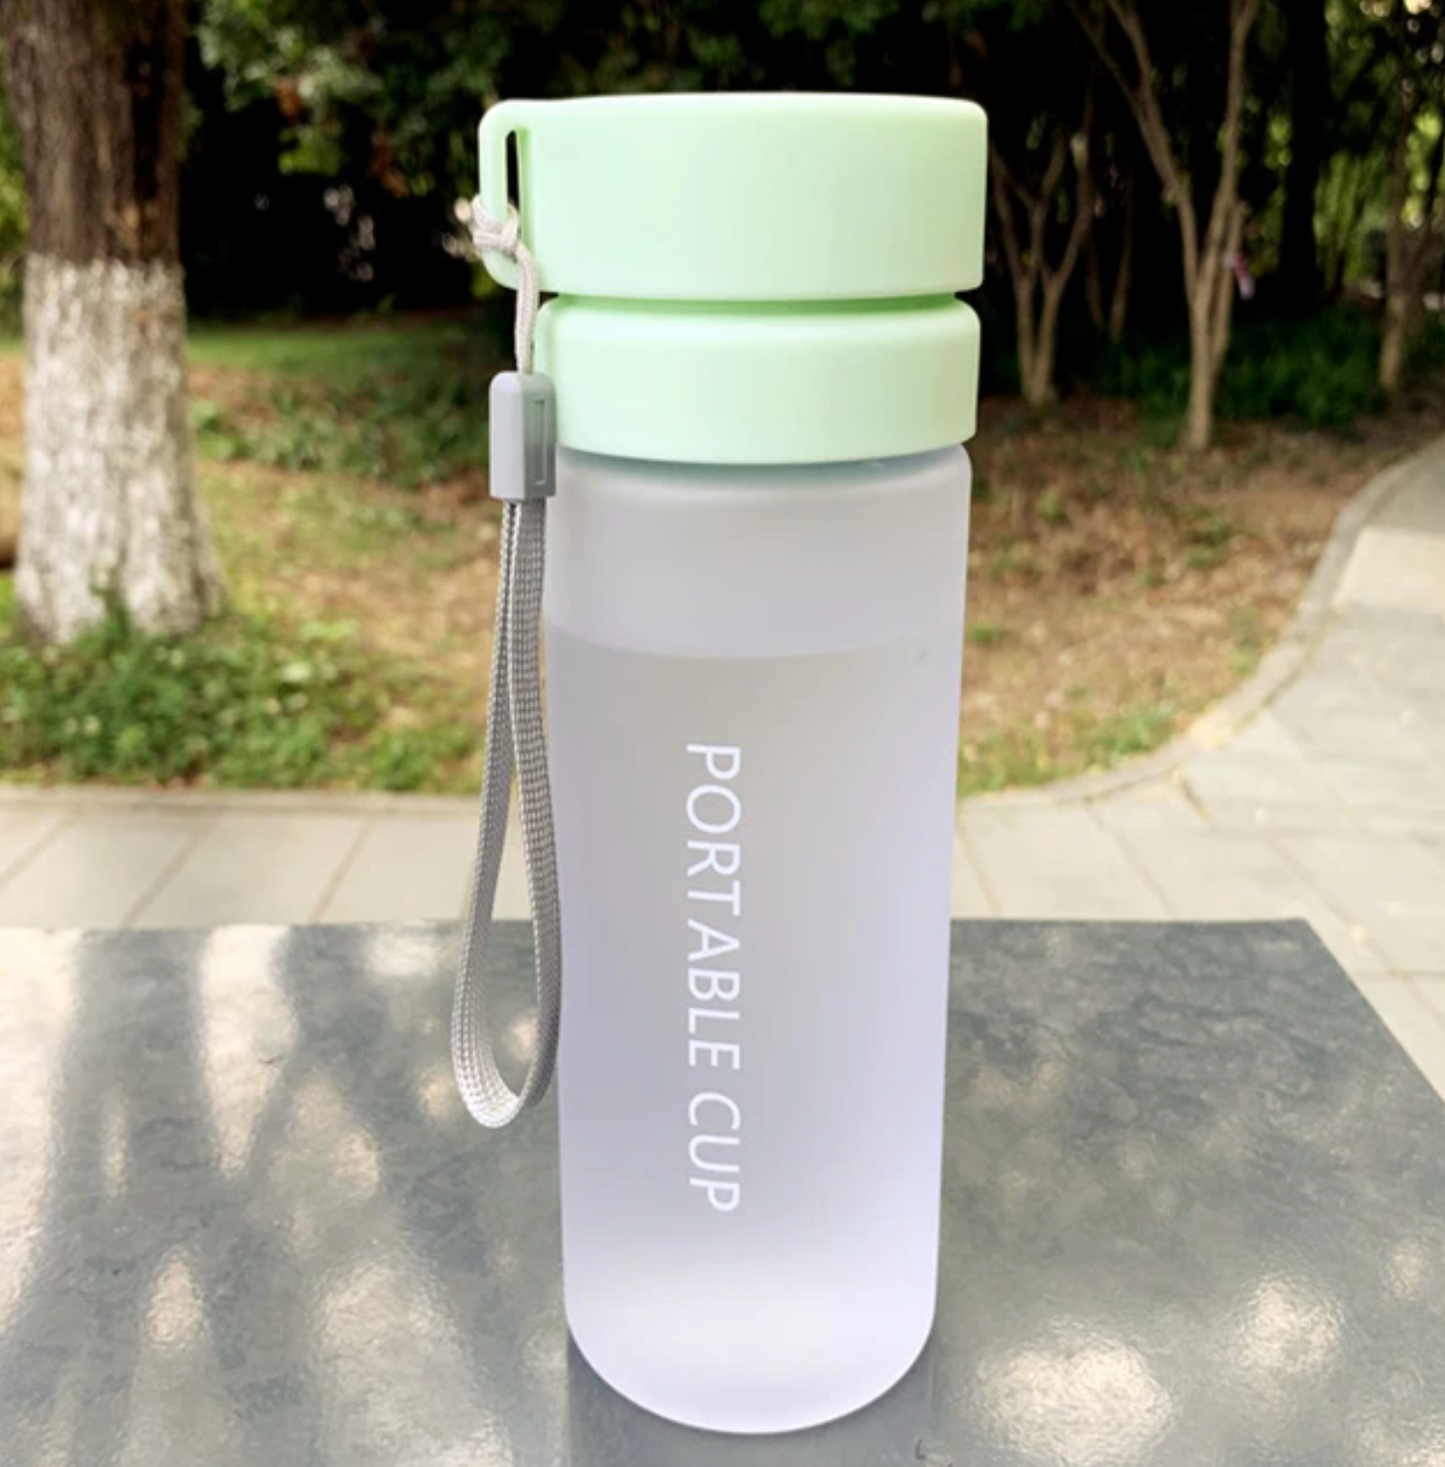 100 Kunststoff Trinkflaschen je 600ml | Werbeartikel zertifiziert und BPA free